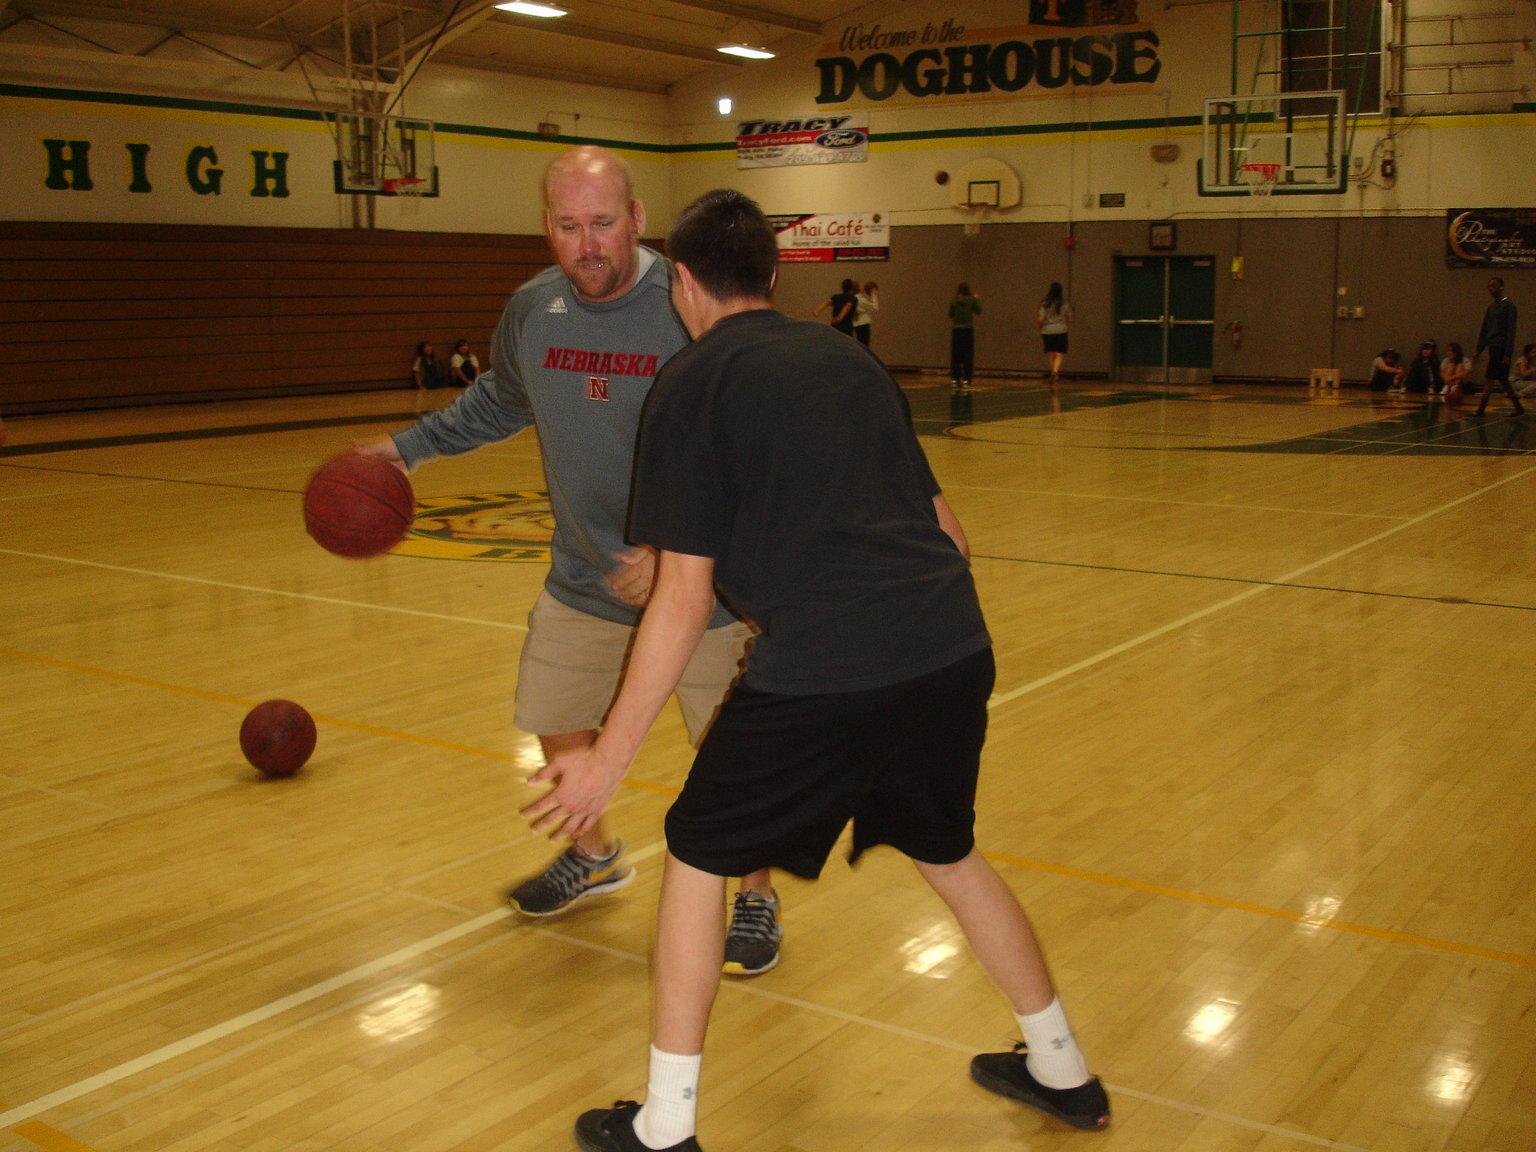 Physical+Education+teacher+Matt+Shrout+challenging+Logan+Frigard+in+a+basketball+game.